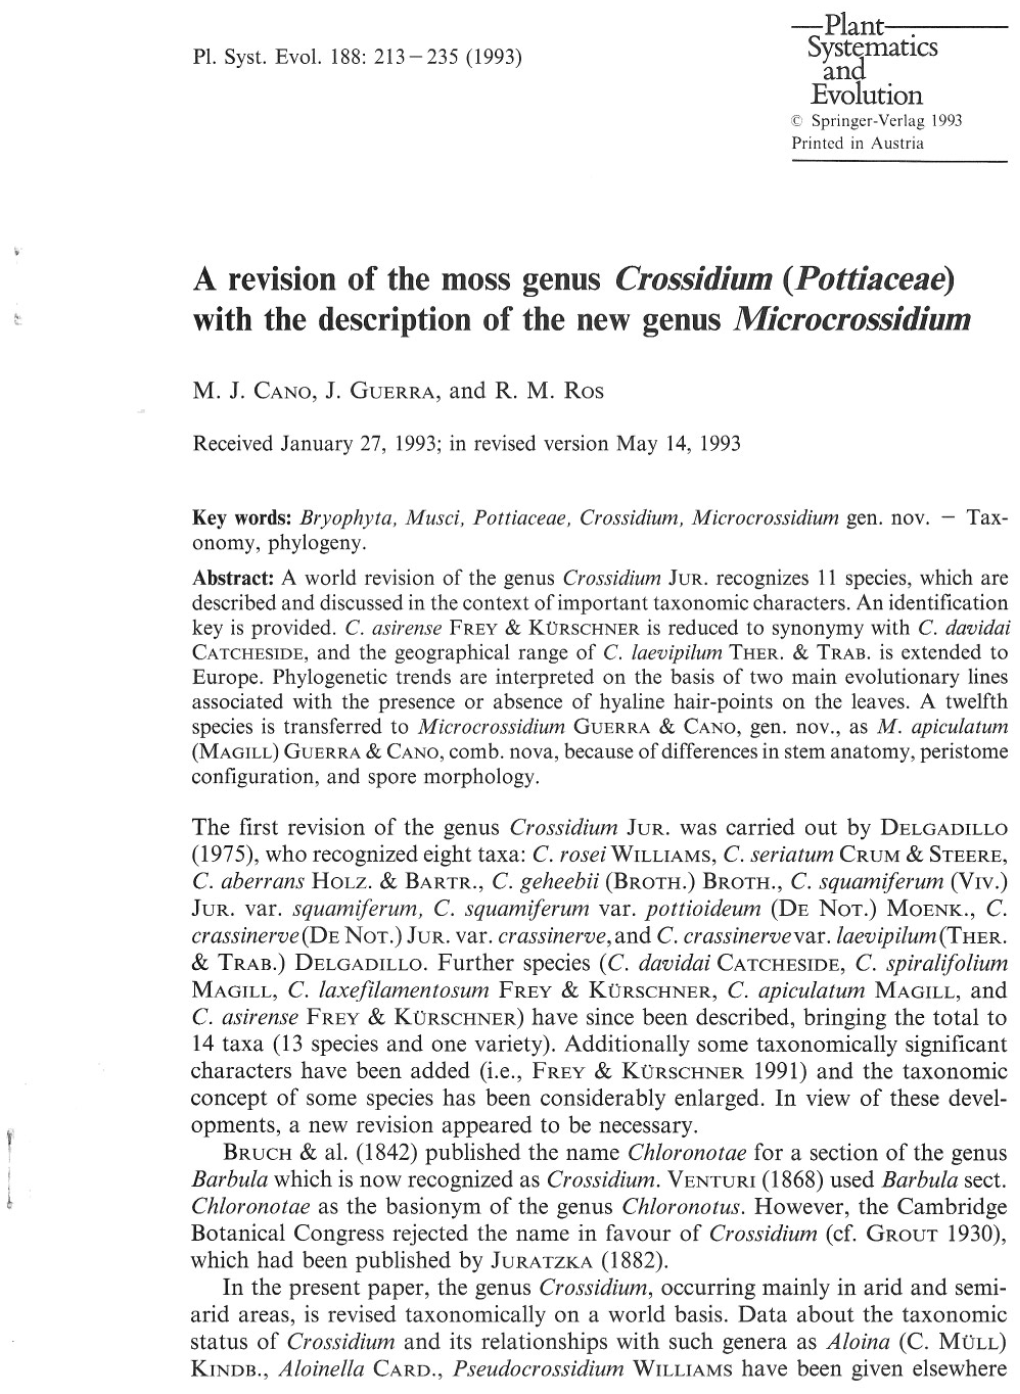 Systematlcs Evolution a Revision of the Moss Genus Crossidium